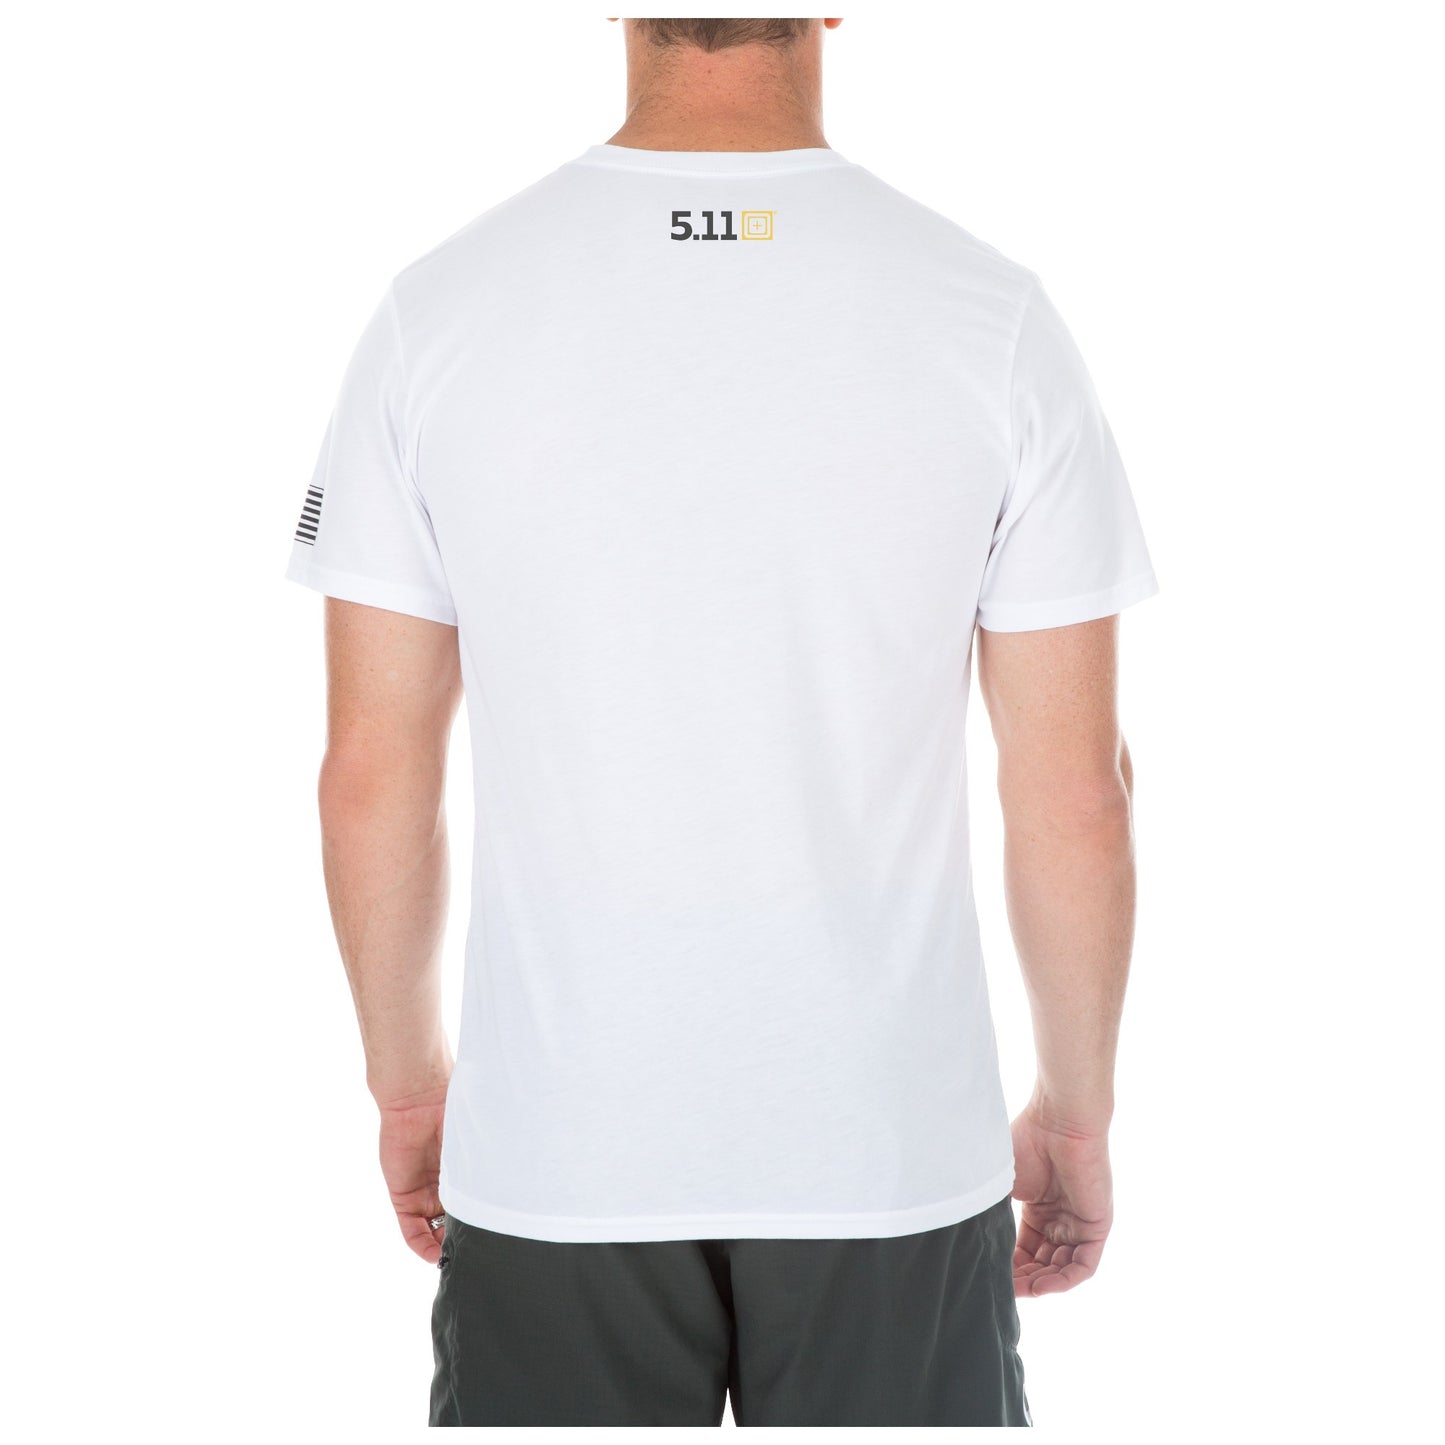 41213FJ - Snake Sledge T-Shirt